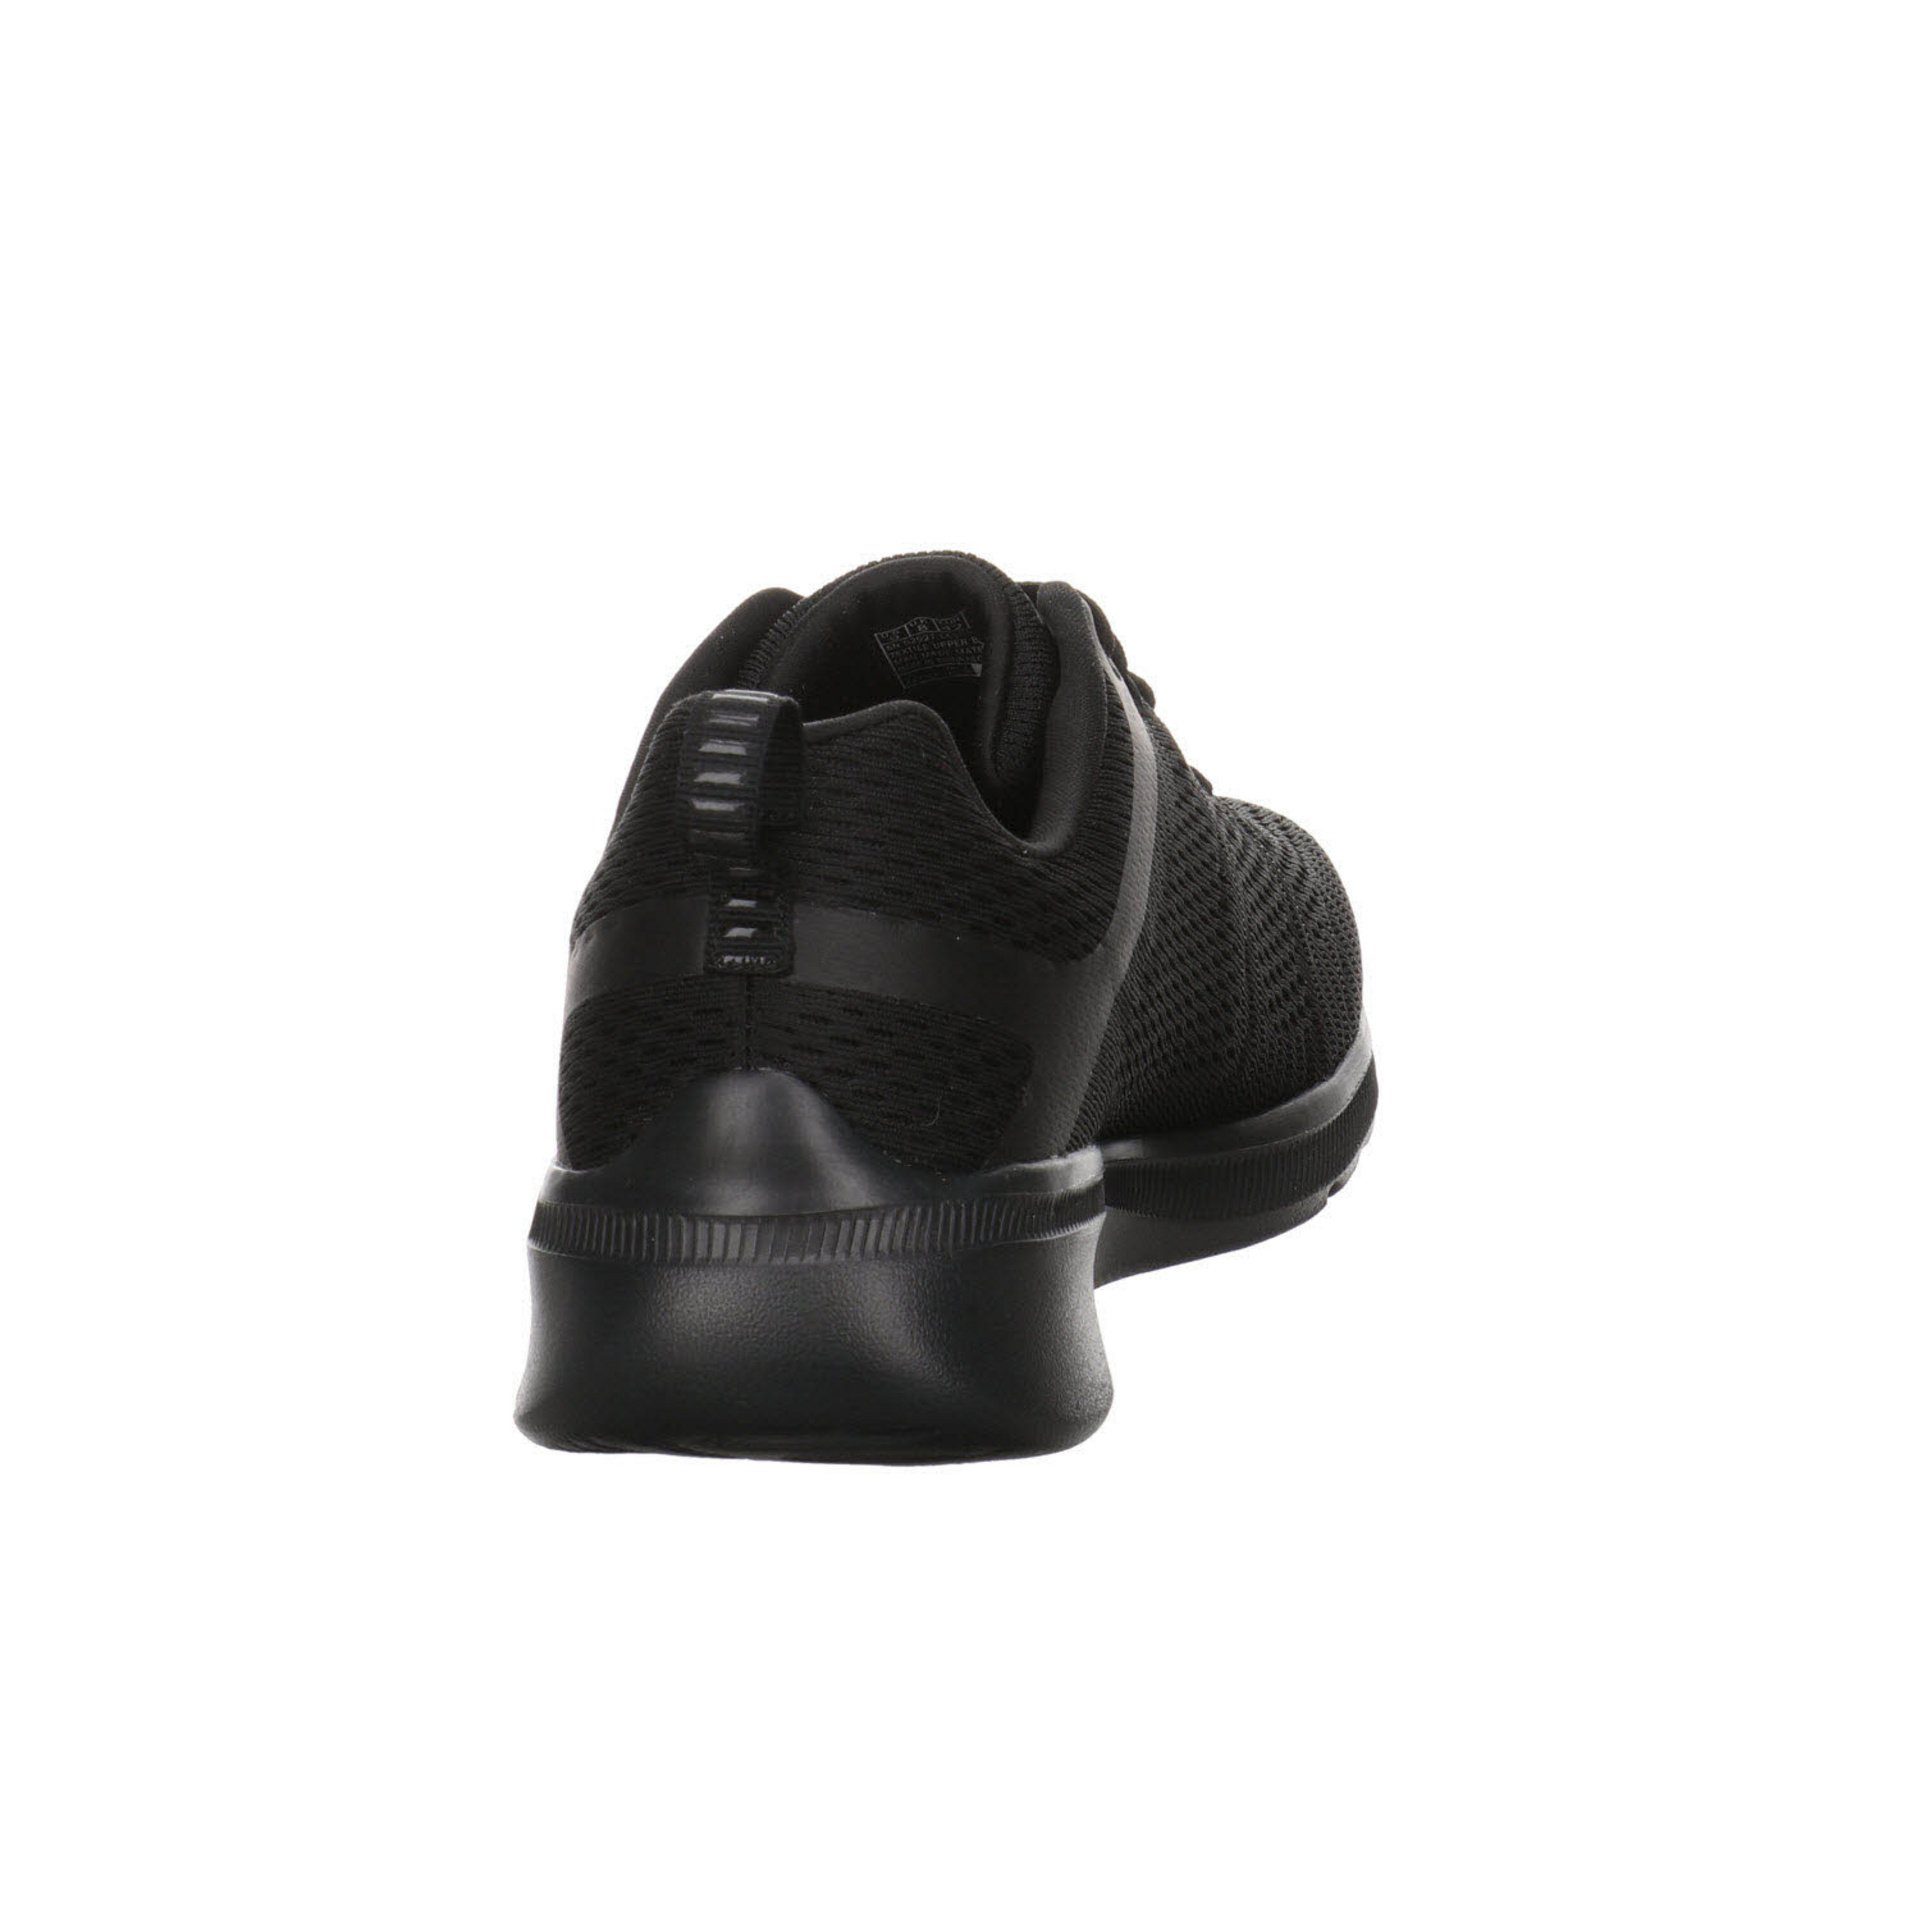 Skechers Relaxed Fit-Equalizer 3.0 Sneaker schwarz uni Textil Textil Sneaker